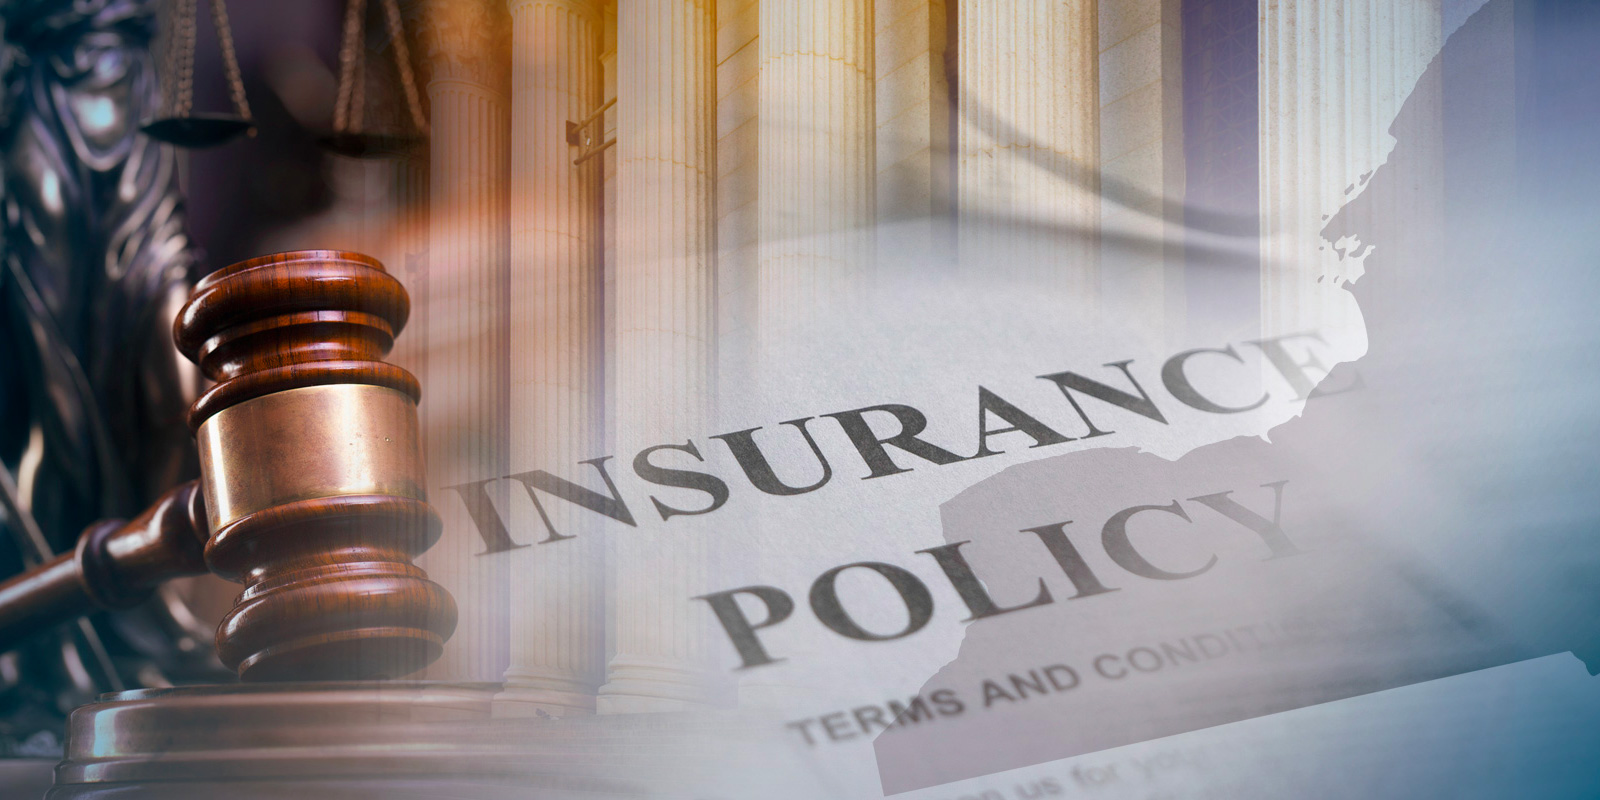 New York Insurance Department Announces New Regulations for Life Insurance